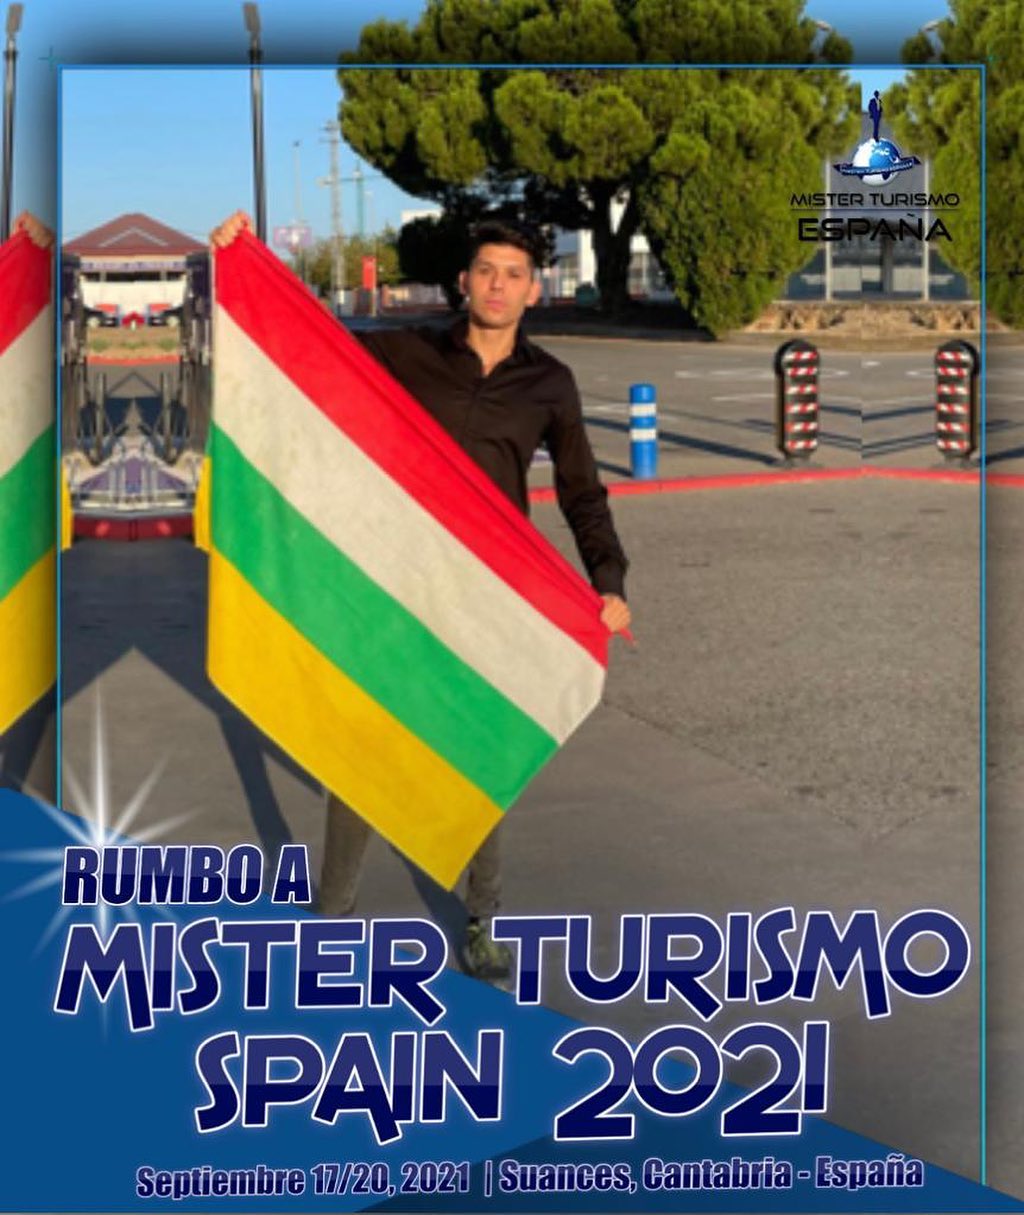 Mister Turismo España 2021 is Rafa De La Vega  from Barcelona 24207712